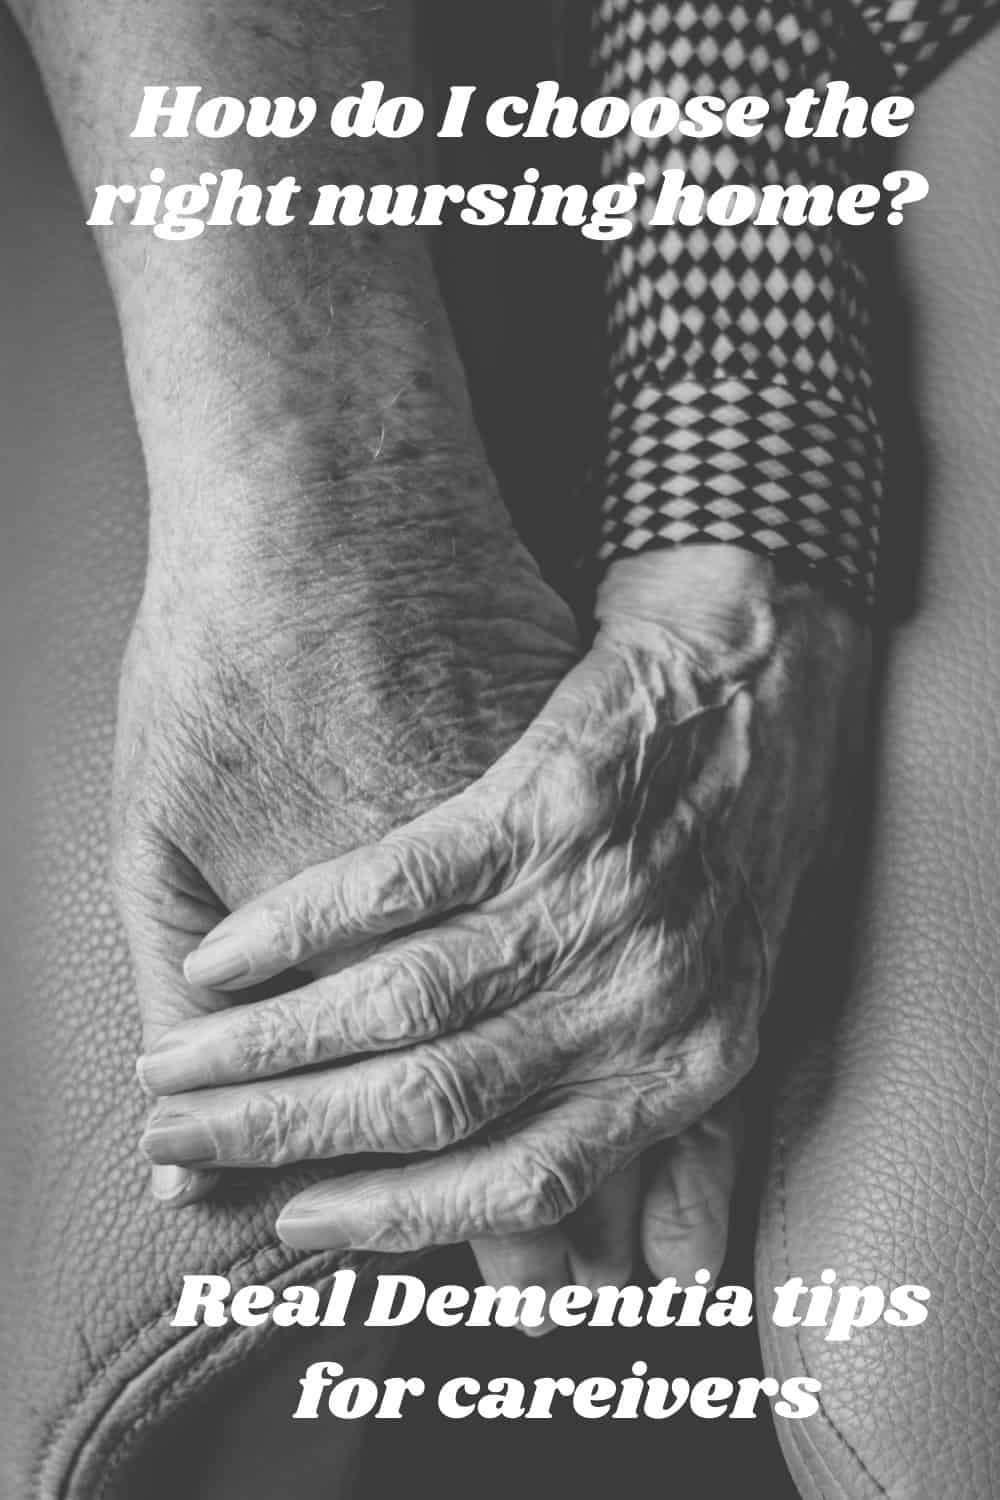 How do I choose the right nursing home? Dementia Care tips for caregivers